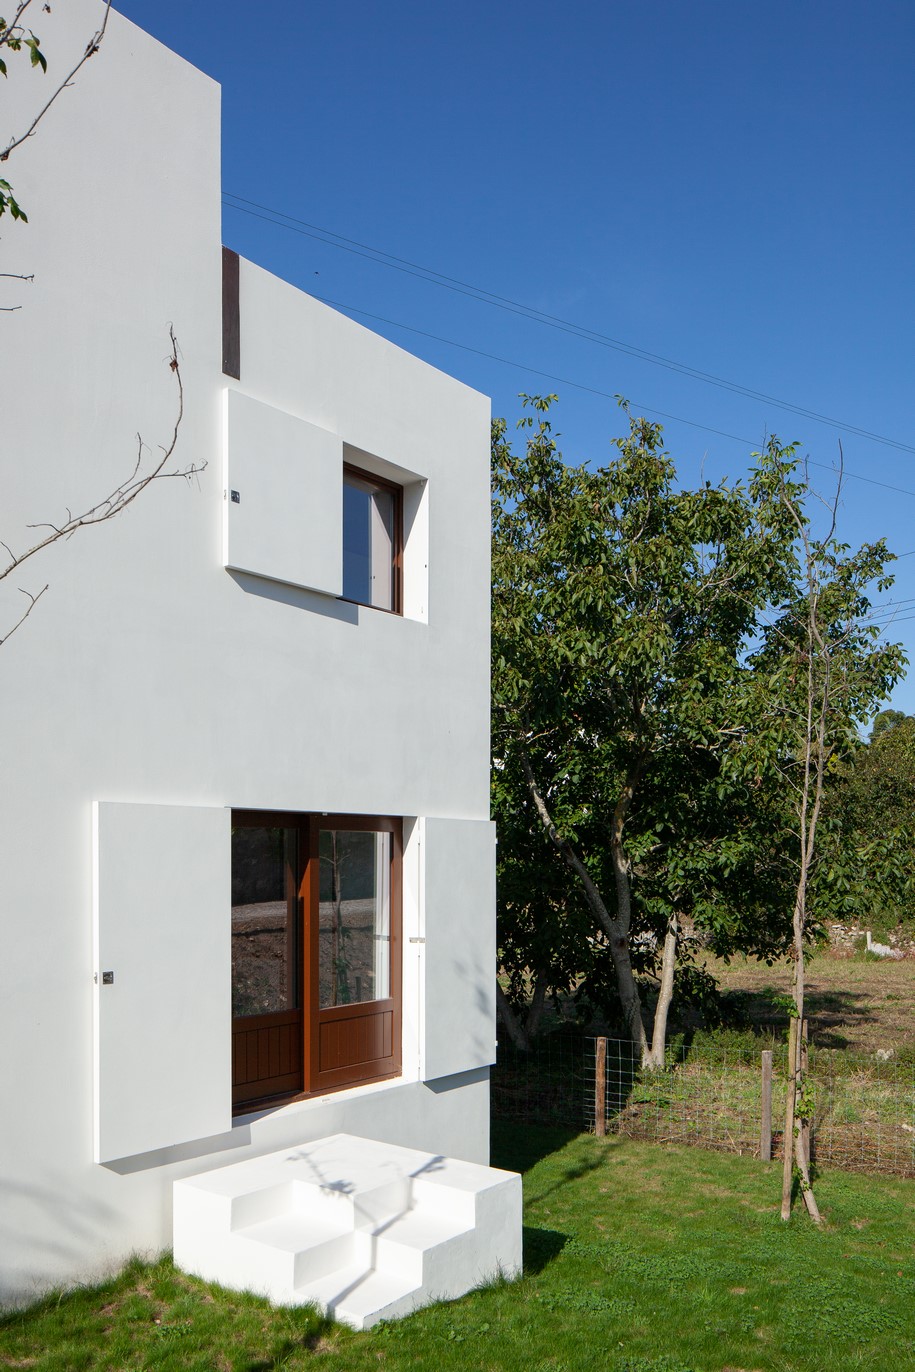 Archisearch Guilherme Machado Vaz designed AFIFE HOUSE as a solid volume